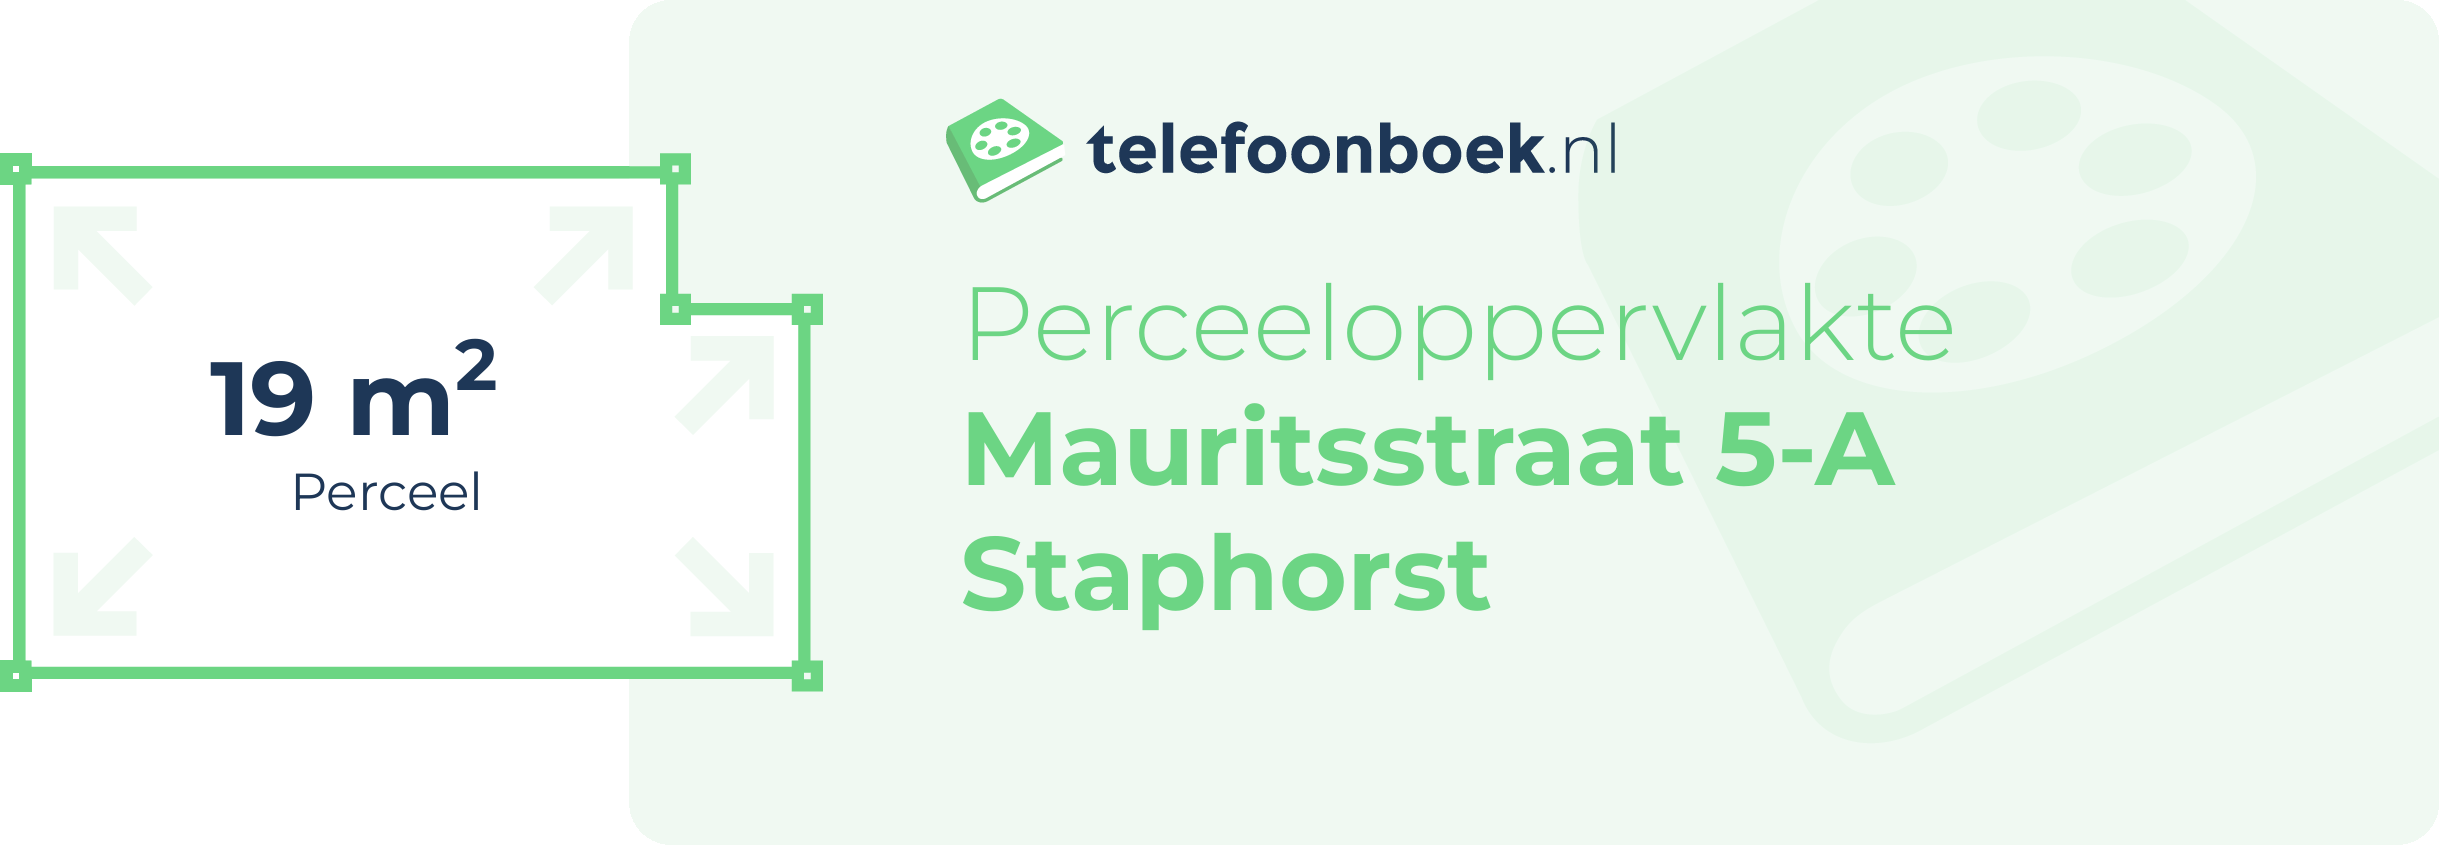 Perceeloppervlakte Mauritsstraat 5-A Staphorst